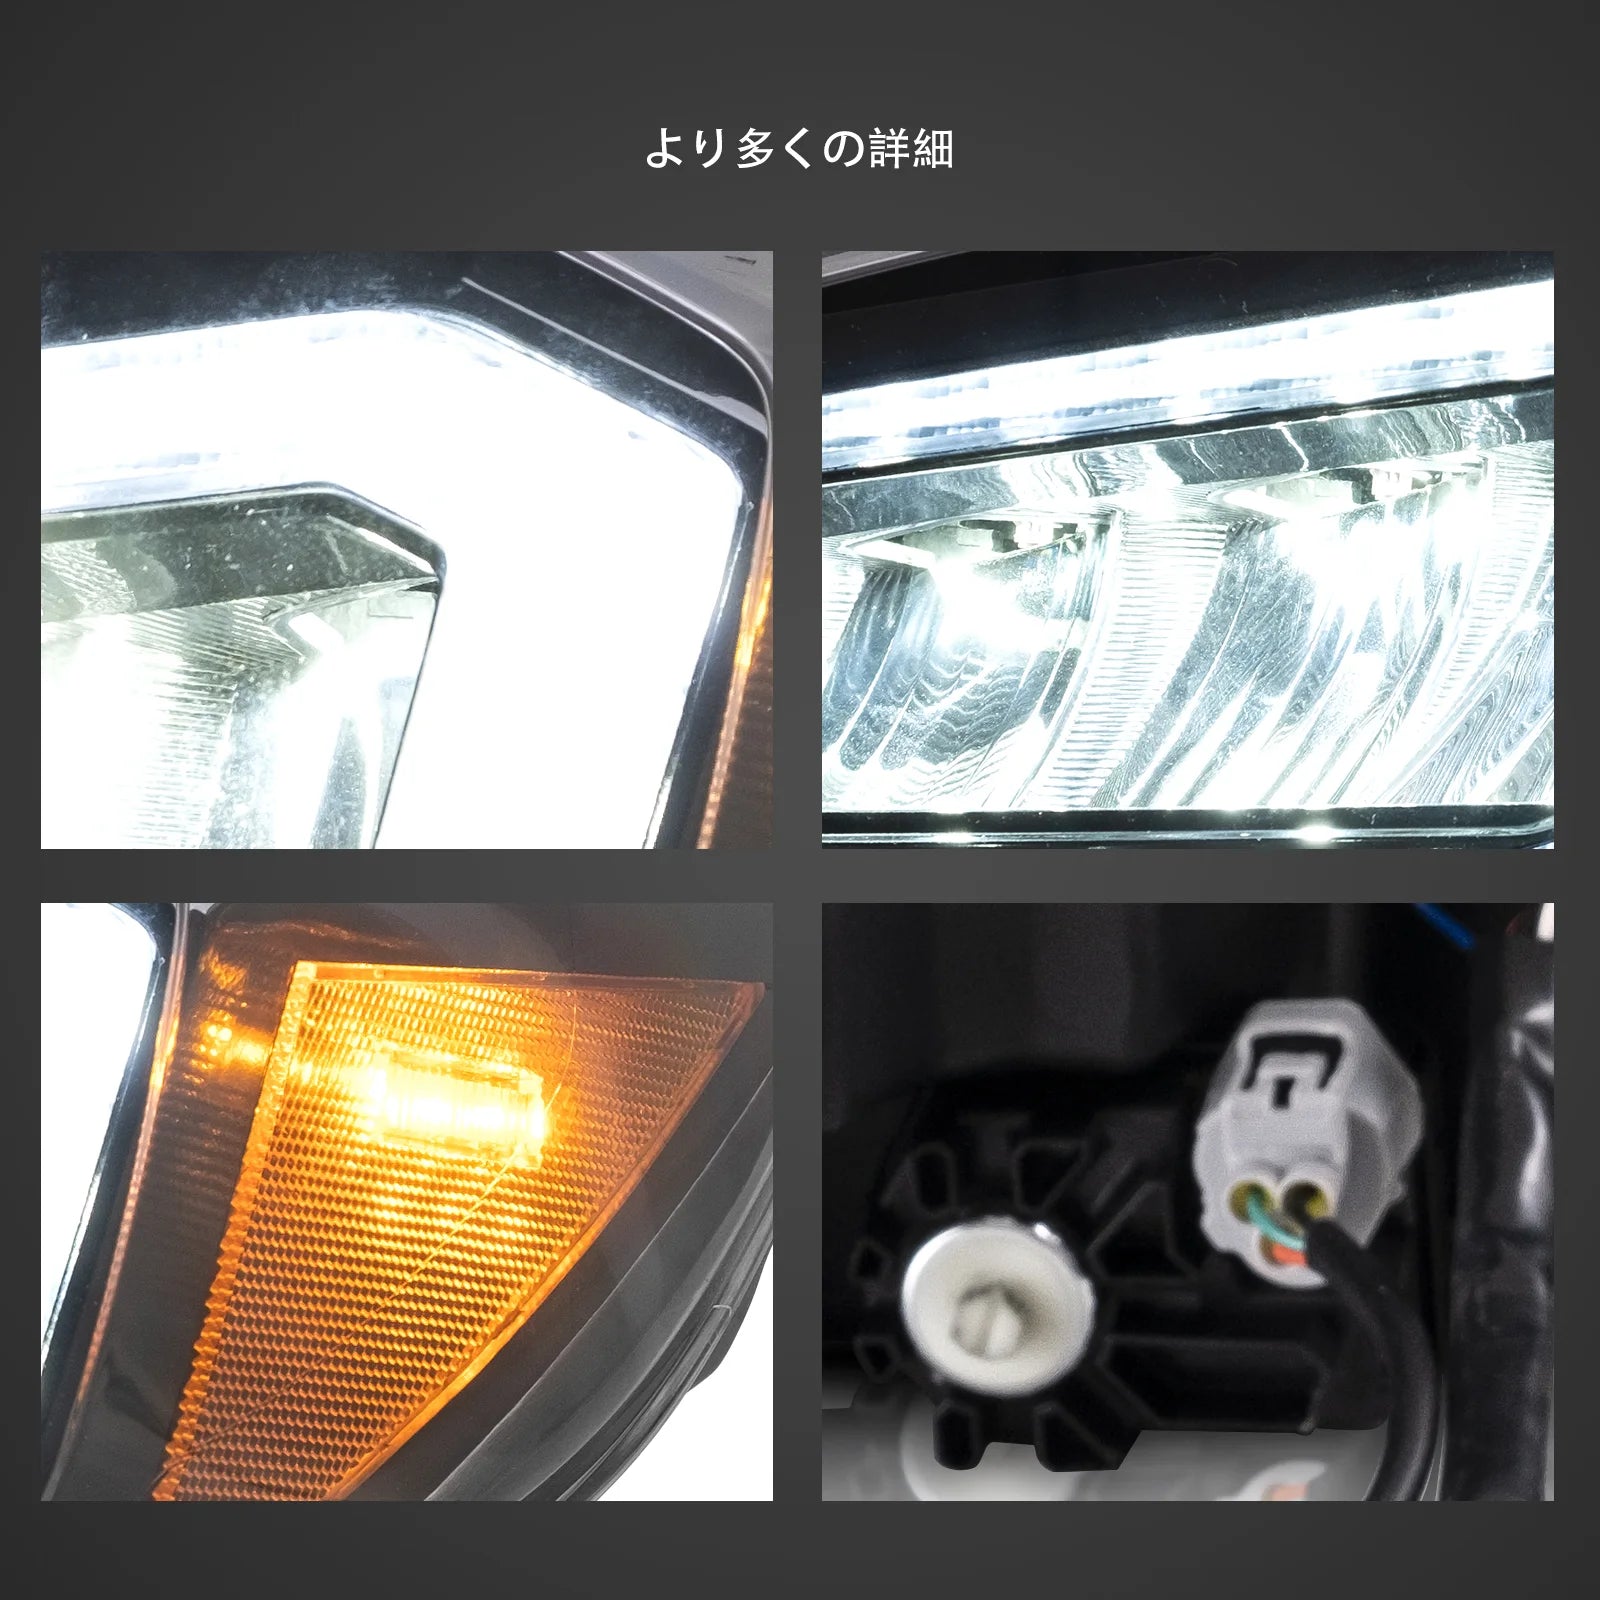 Vland 86 Headlight New Look High Performance Light for BRZ, FRS, FT86 12-21 